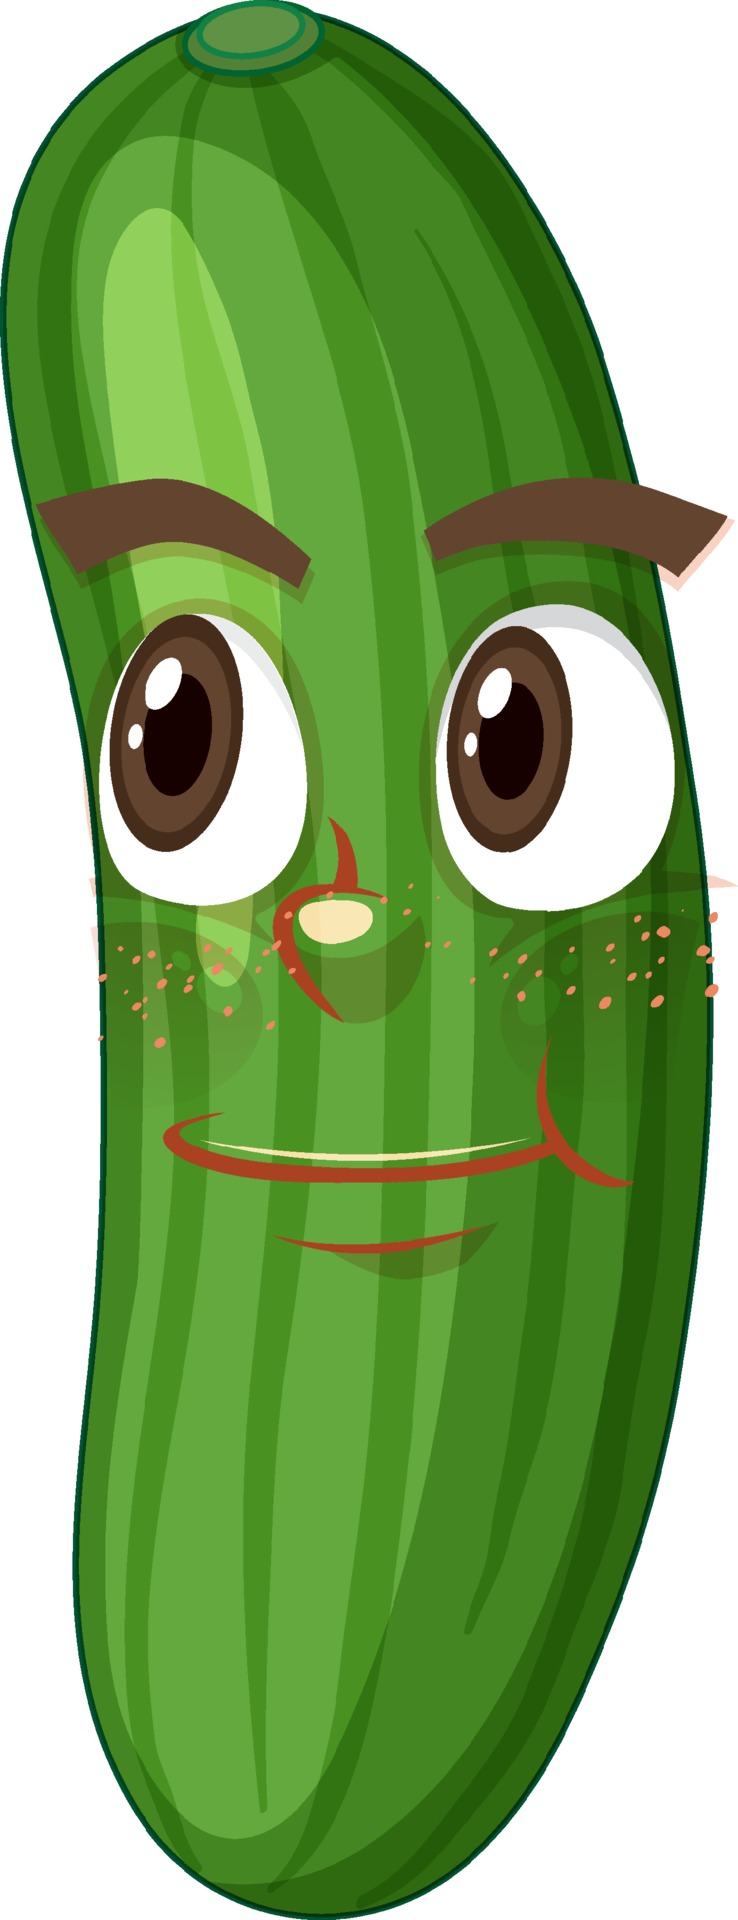 Cucumber cartoon character with facial expression 1963570 Vector Art at  Vecteezy